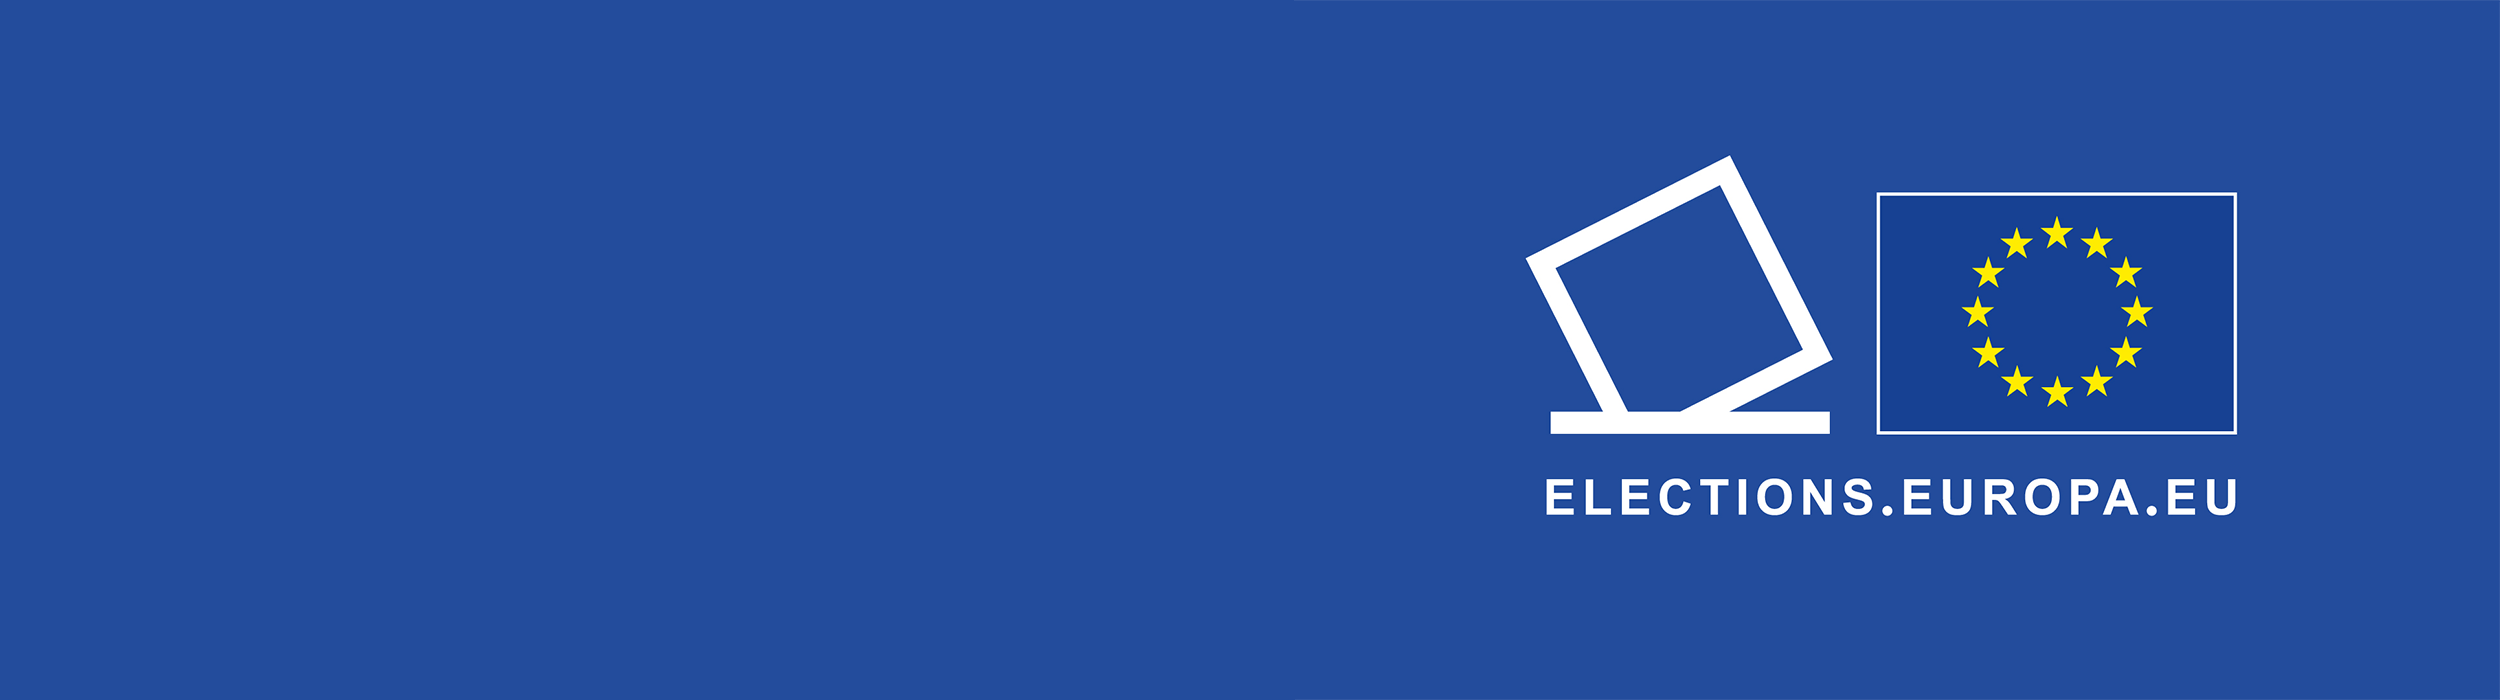 EU elections banner